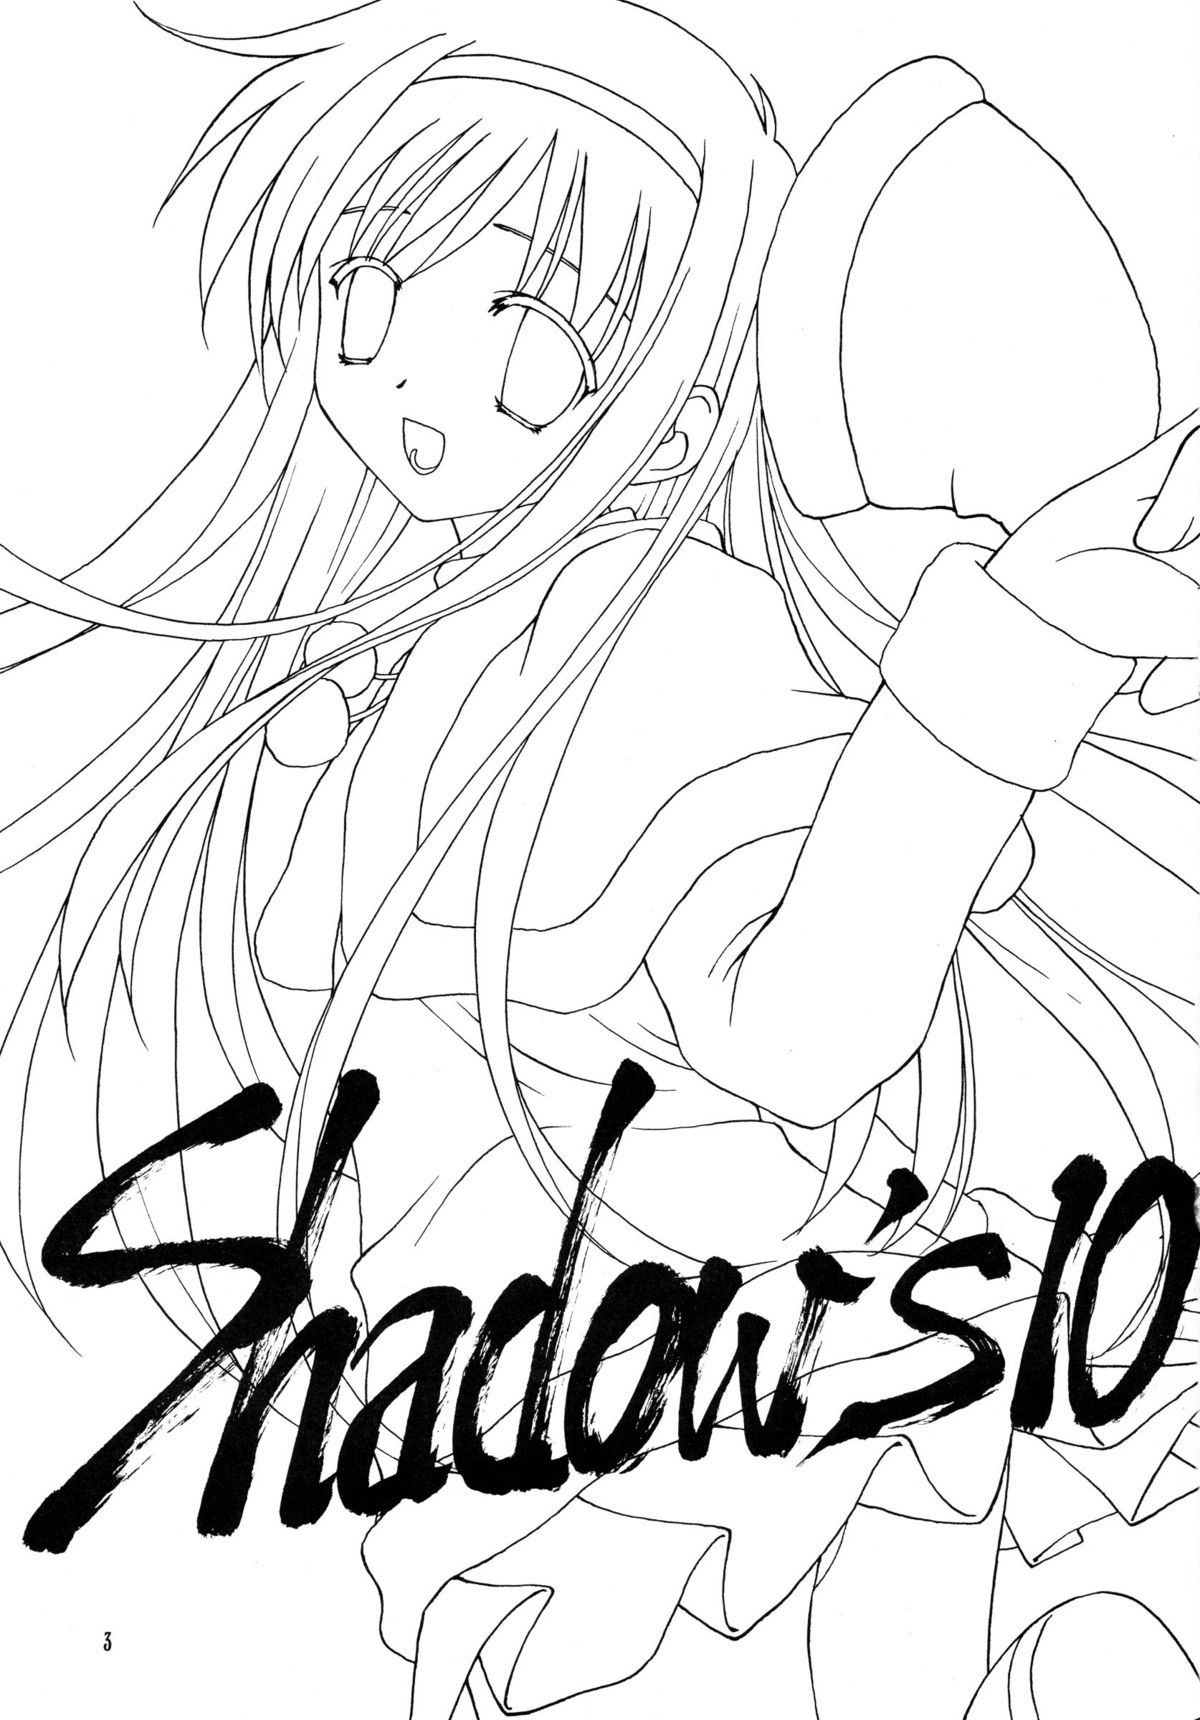 (C65) [Shadow's (影乃いりす)] Shadow's 10 (家族計画)